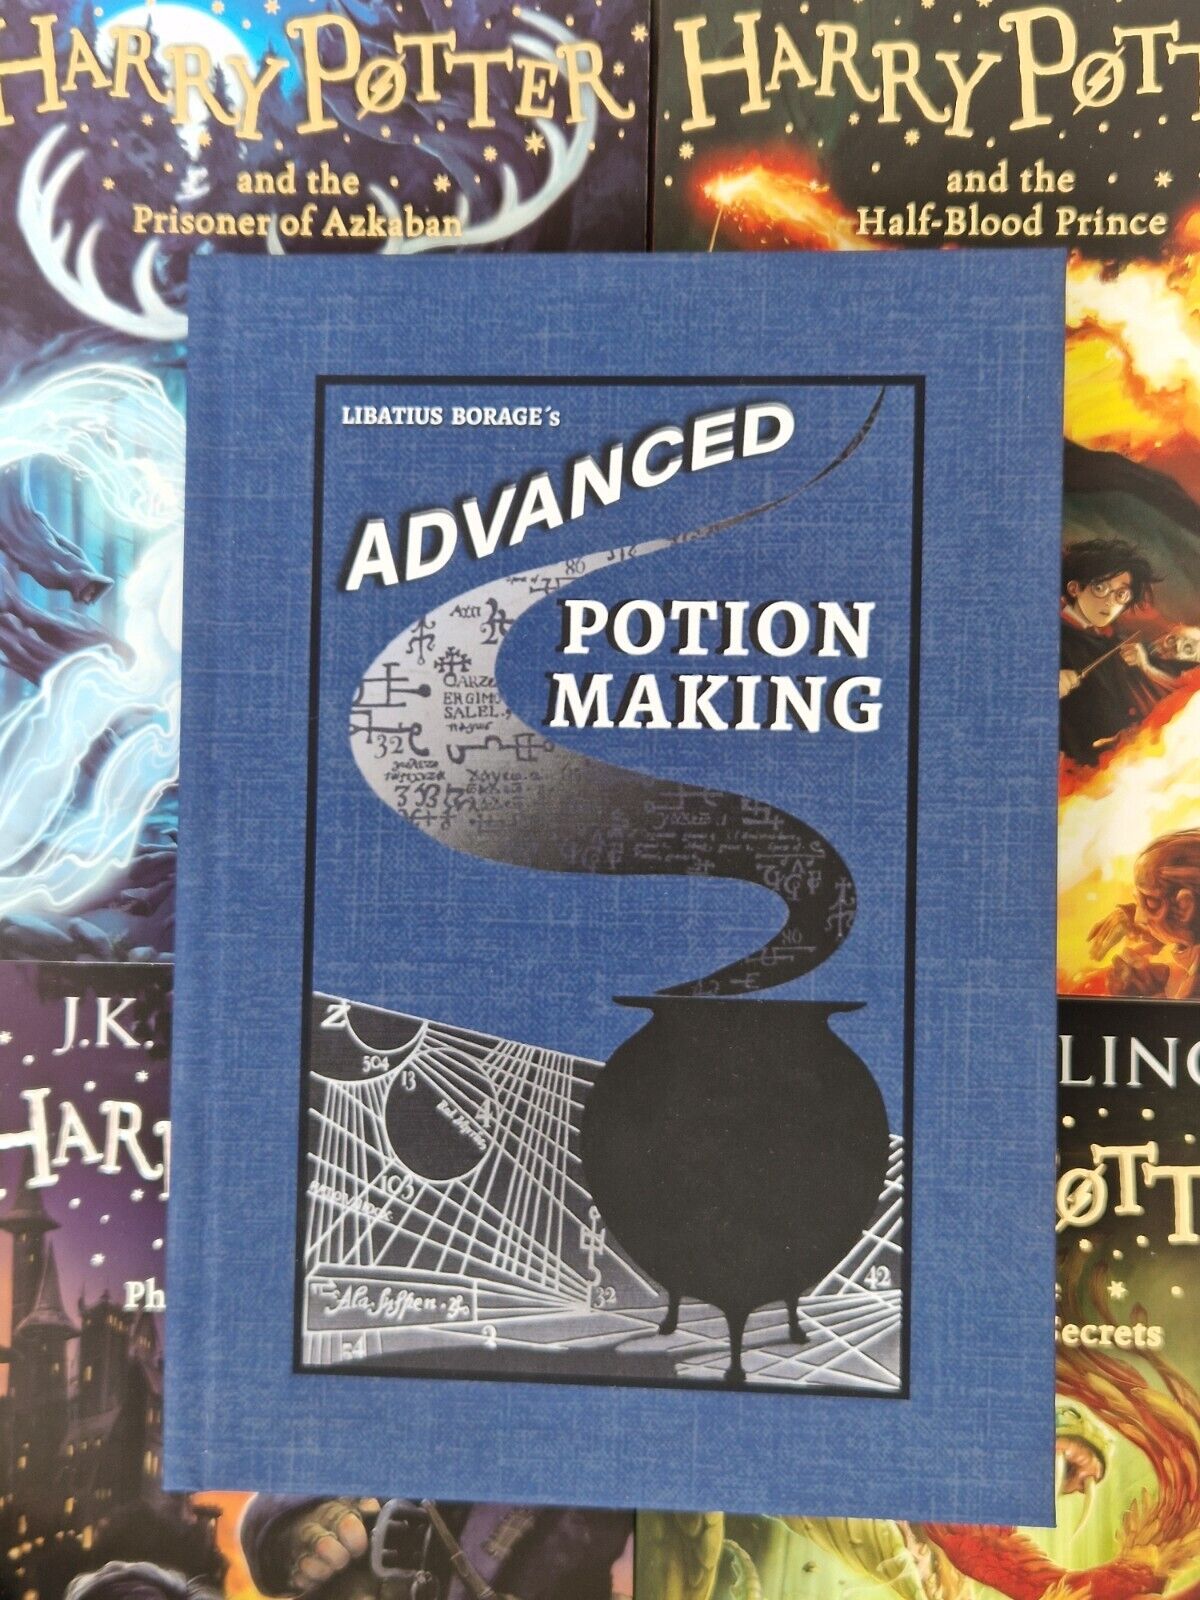 Book: Advanced Potion Making